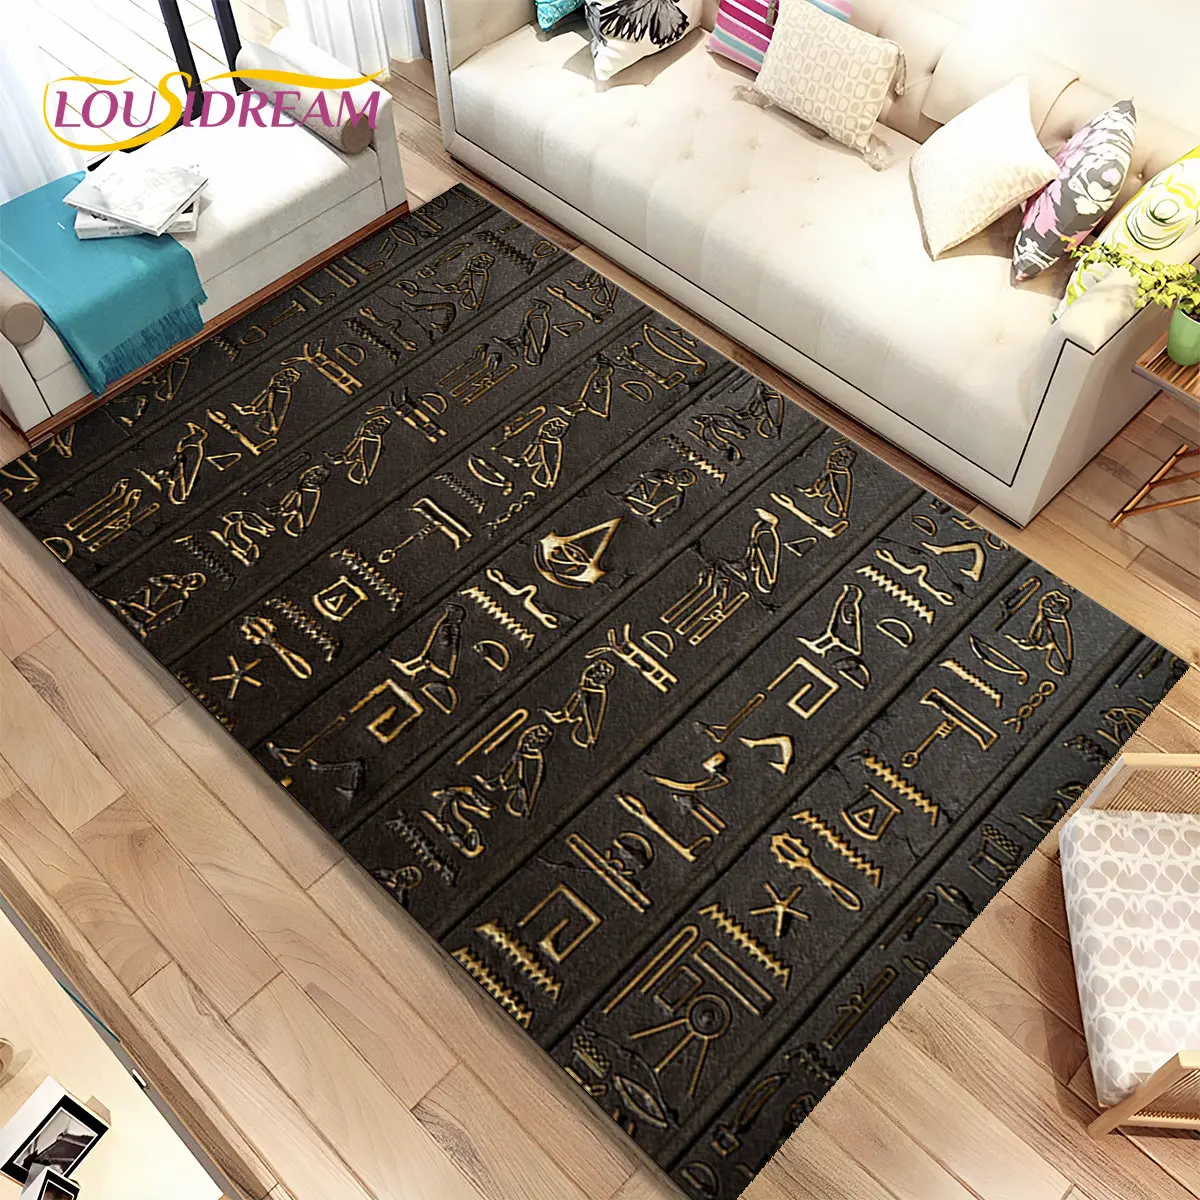 

Egyptian Mythology Pharaoh Hieroglyphics Area Rug,Carpet for Home Living Room Bedroom Sofa Doormat Decor,kids Non-slip Floor Mat